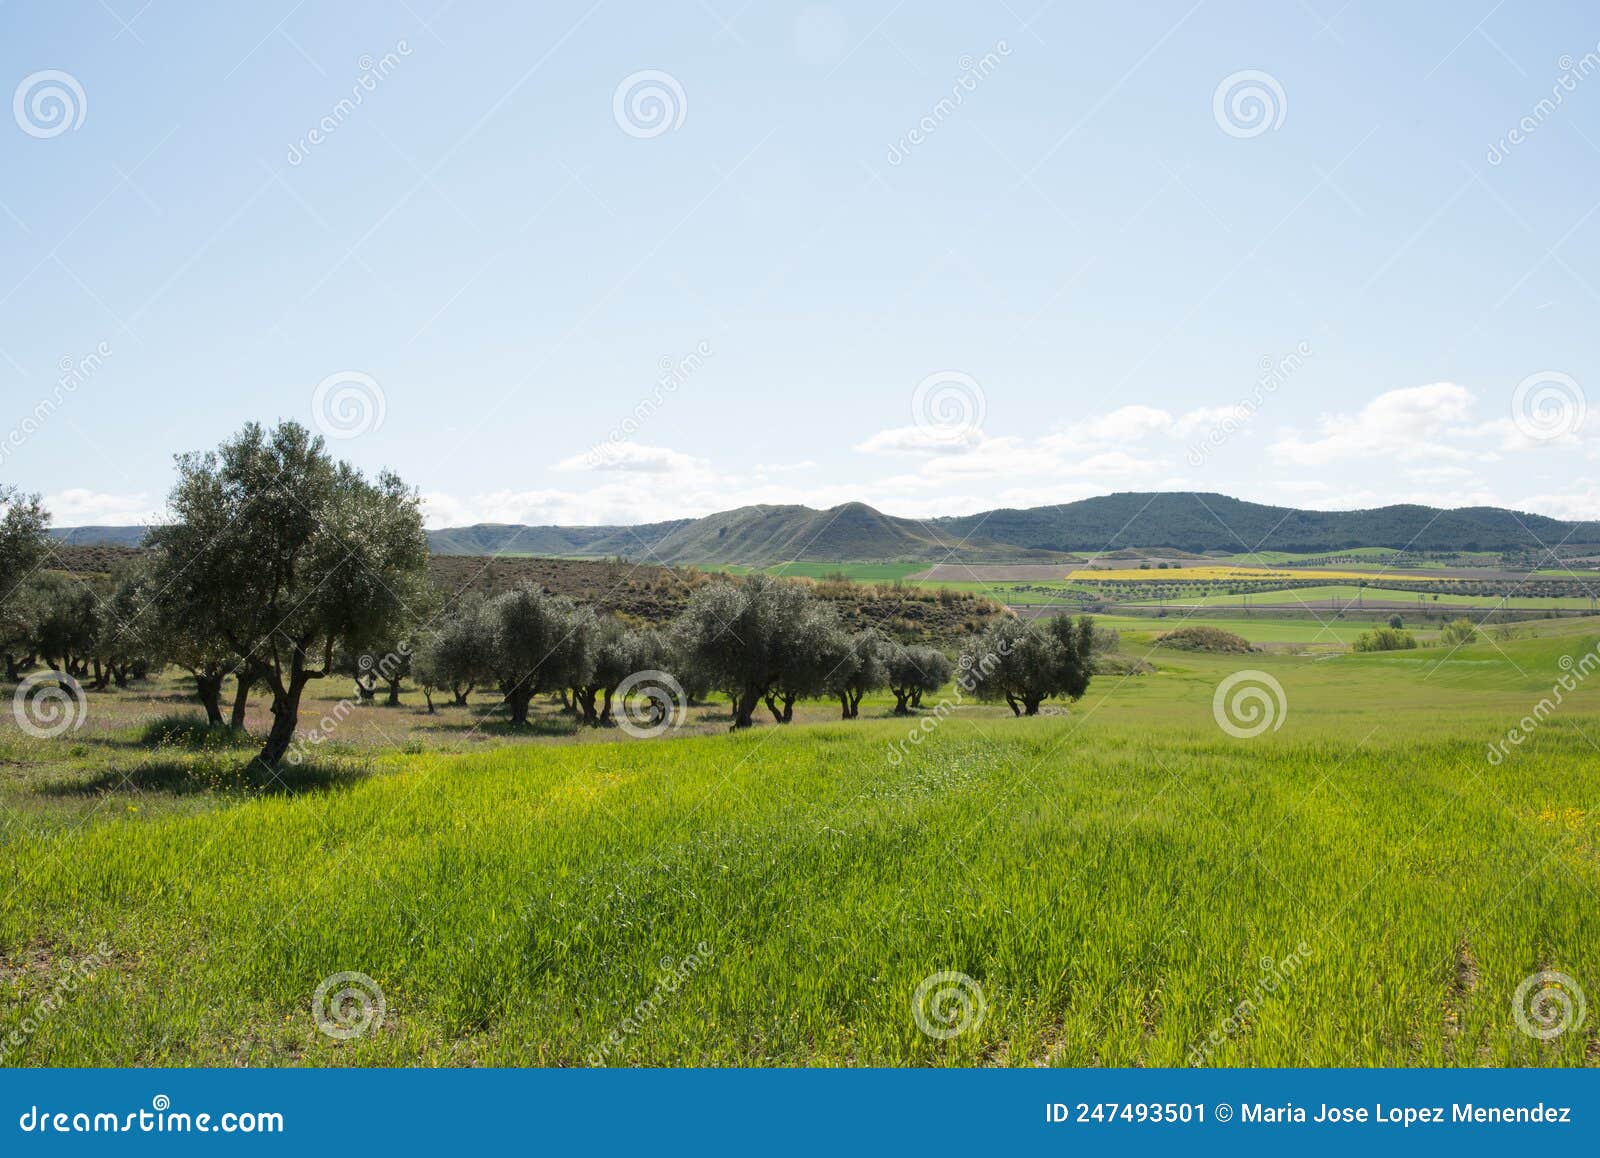 beautiful landscape in springtime. green fields, trees and blue sky. los cerros park, alcala de henares, madrid